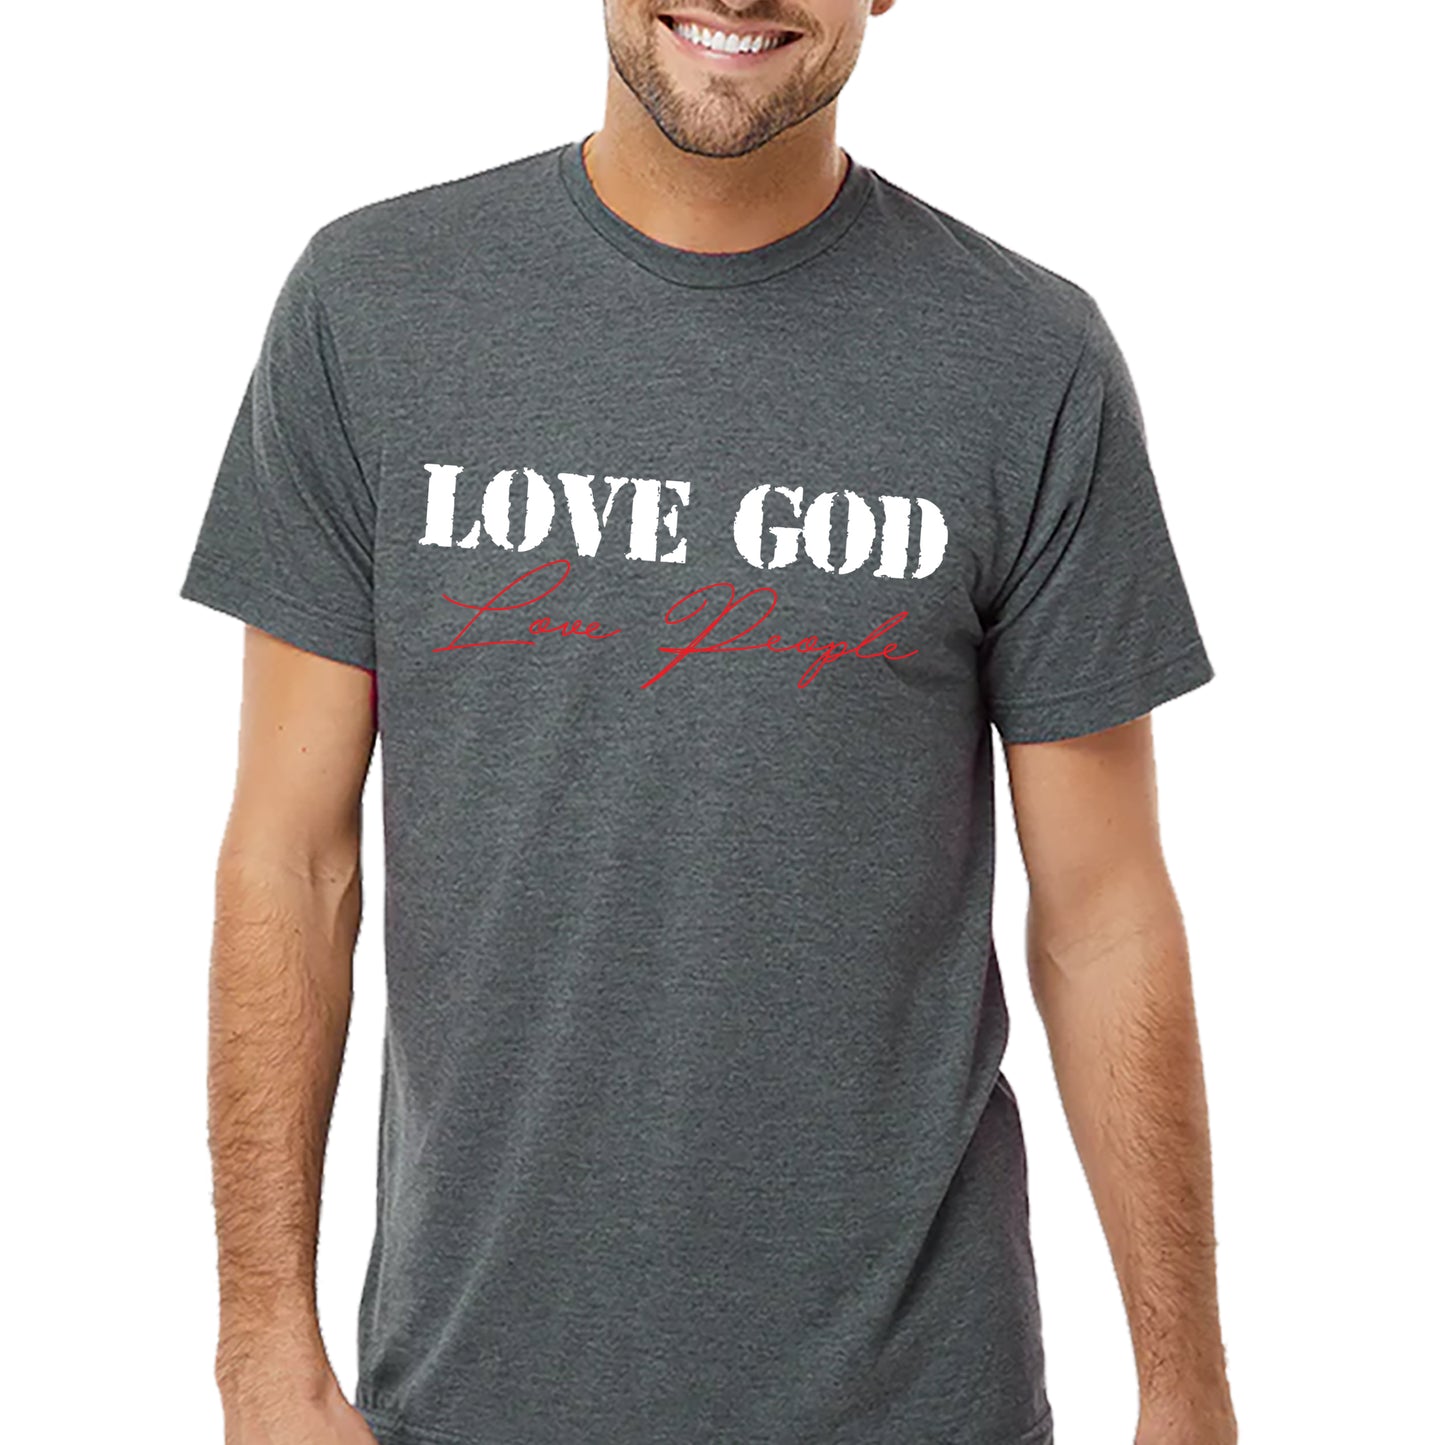 Love God Love People T-shirt